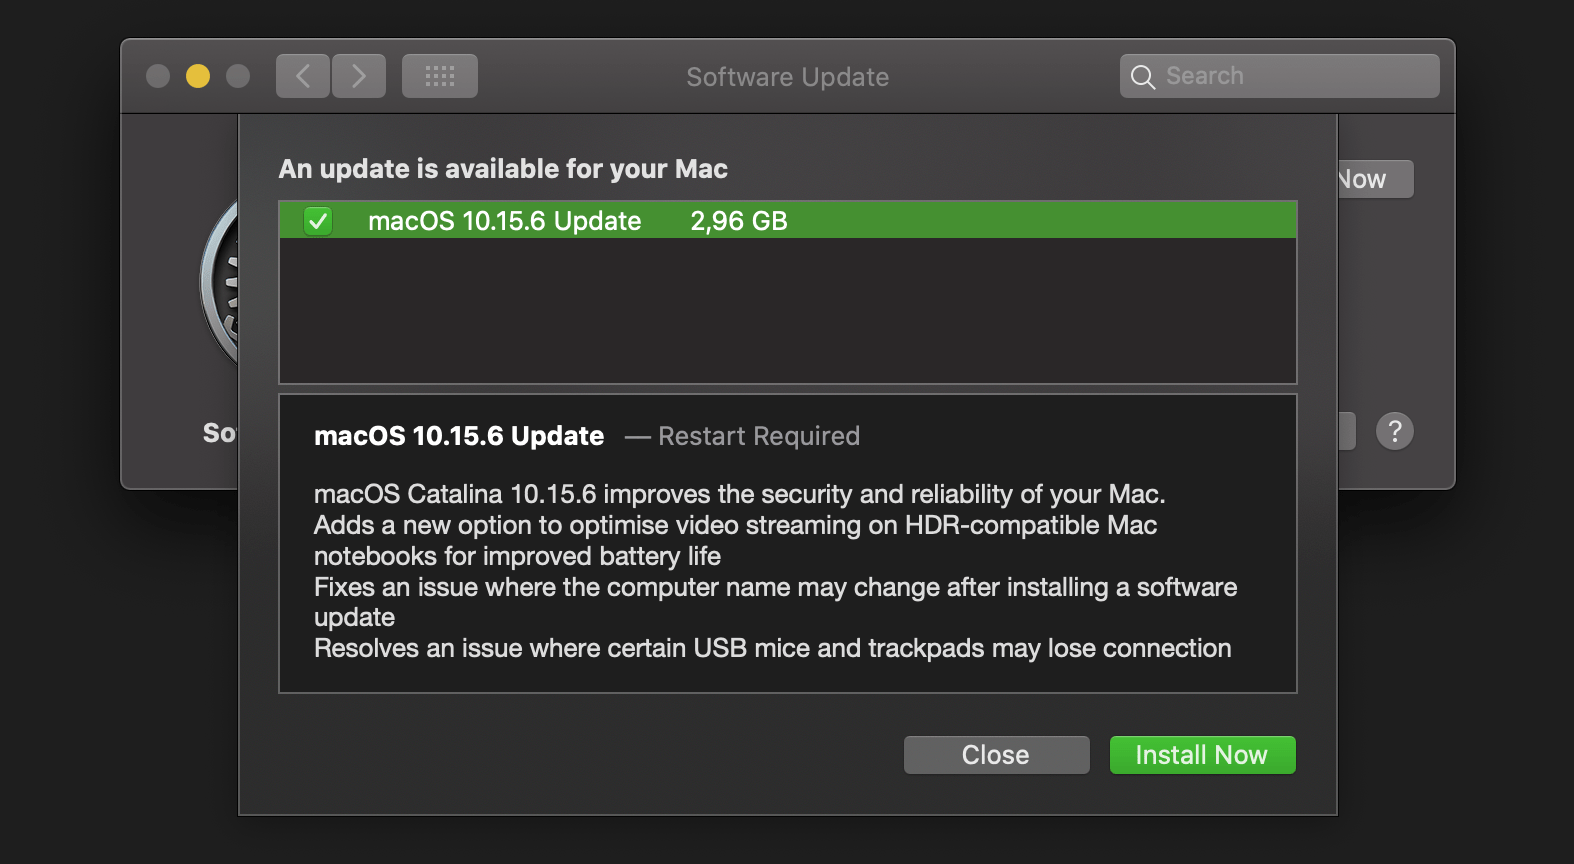 macOS 10.15.6 Update